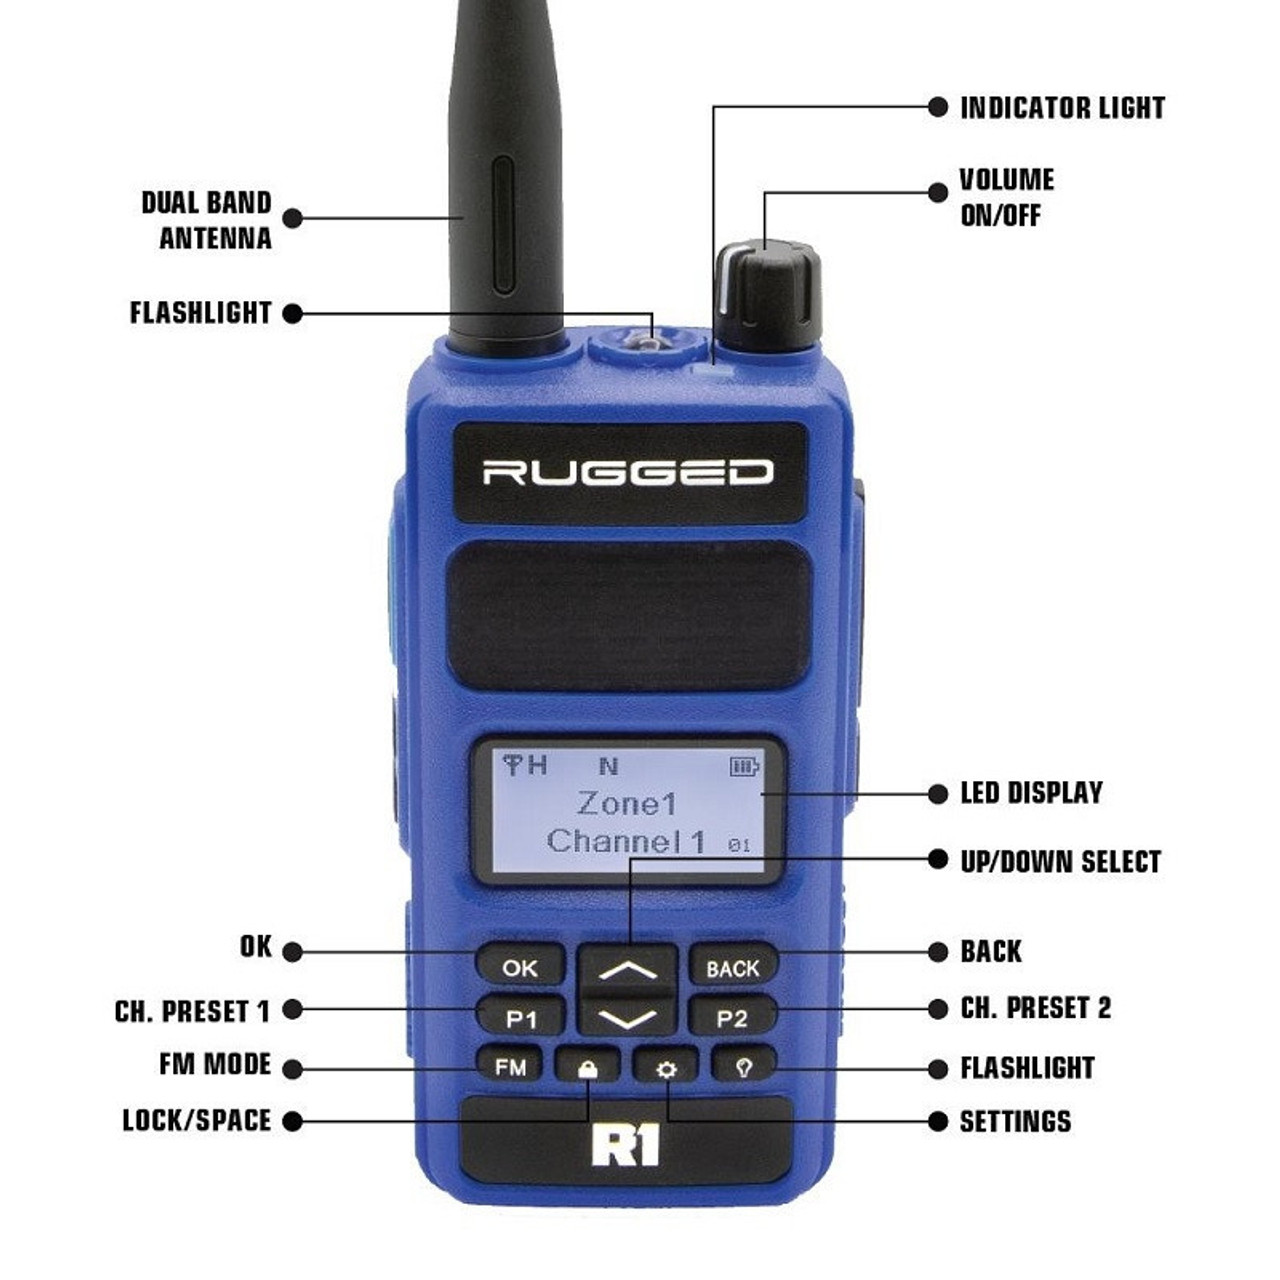 What's Better - VHF radios (Rugged radio) or CB radio?